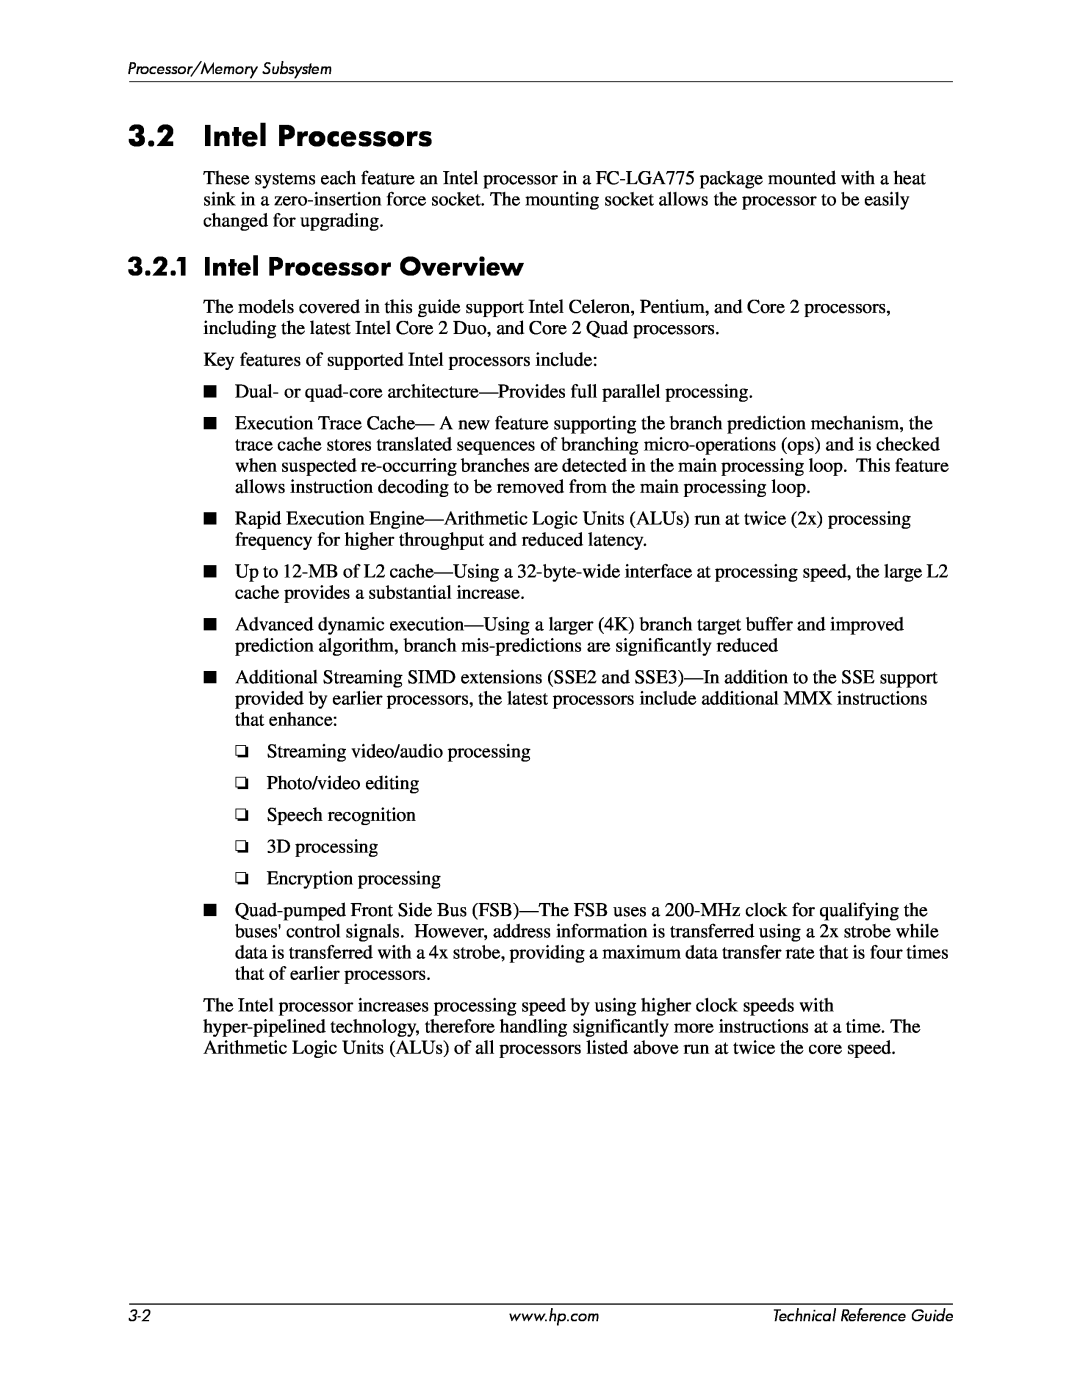 HP 8000 tower manual Intel Processors, Intel Processor Overview 